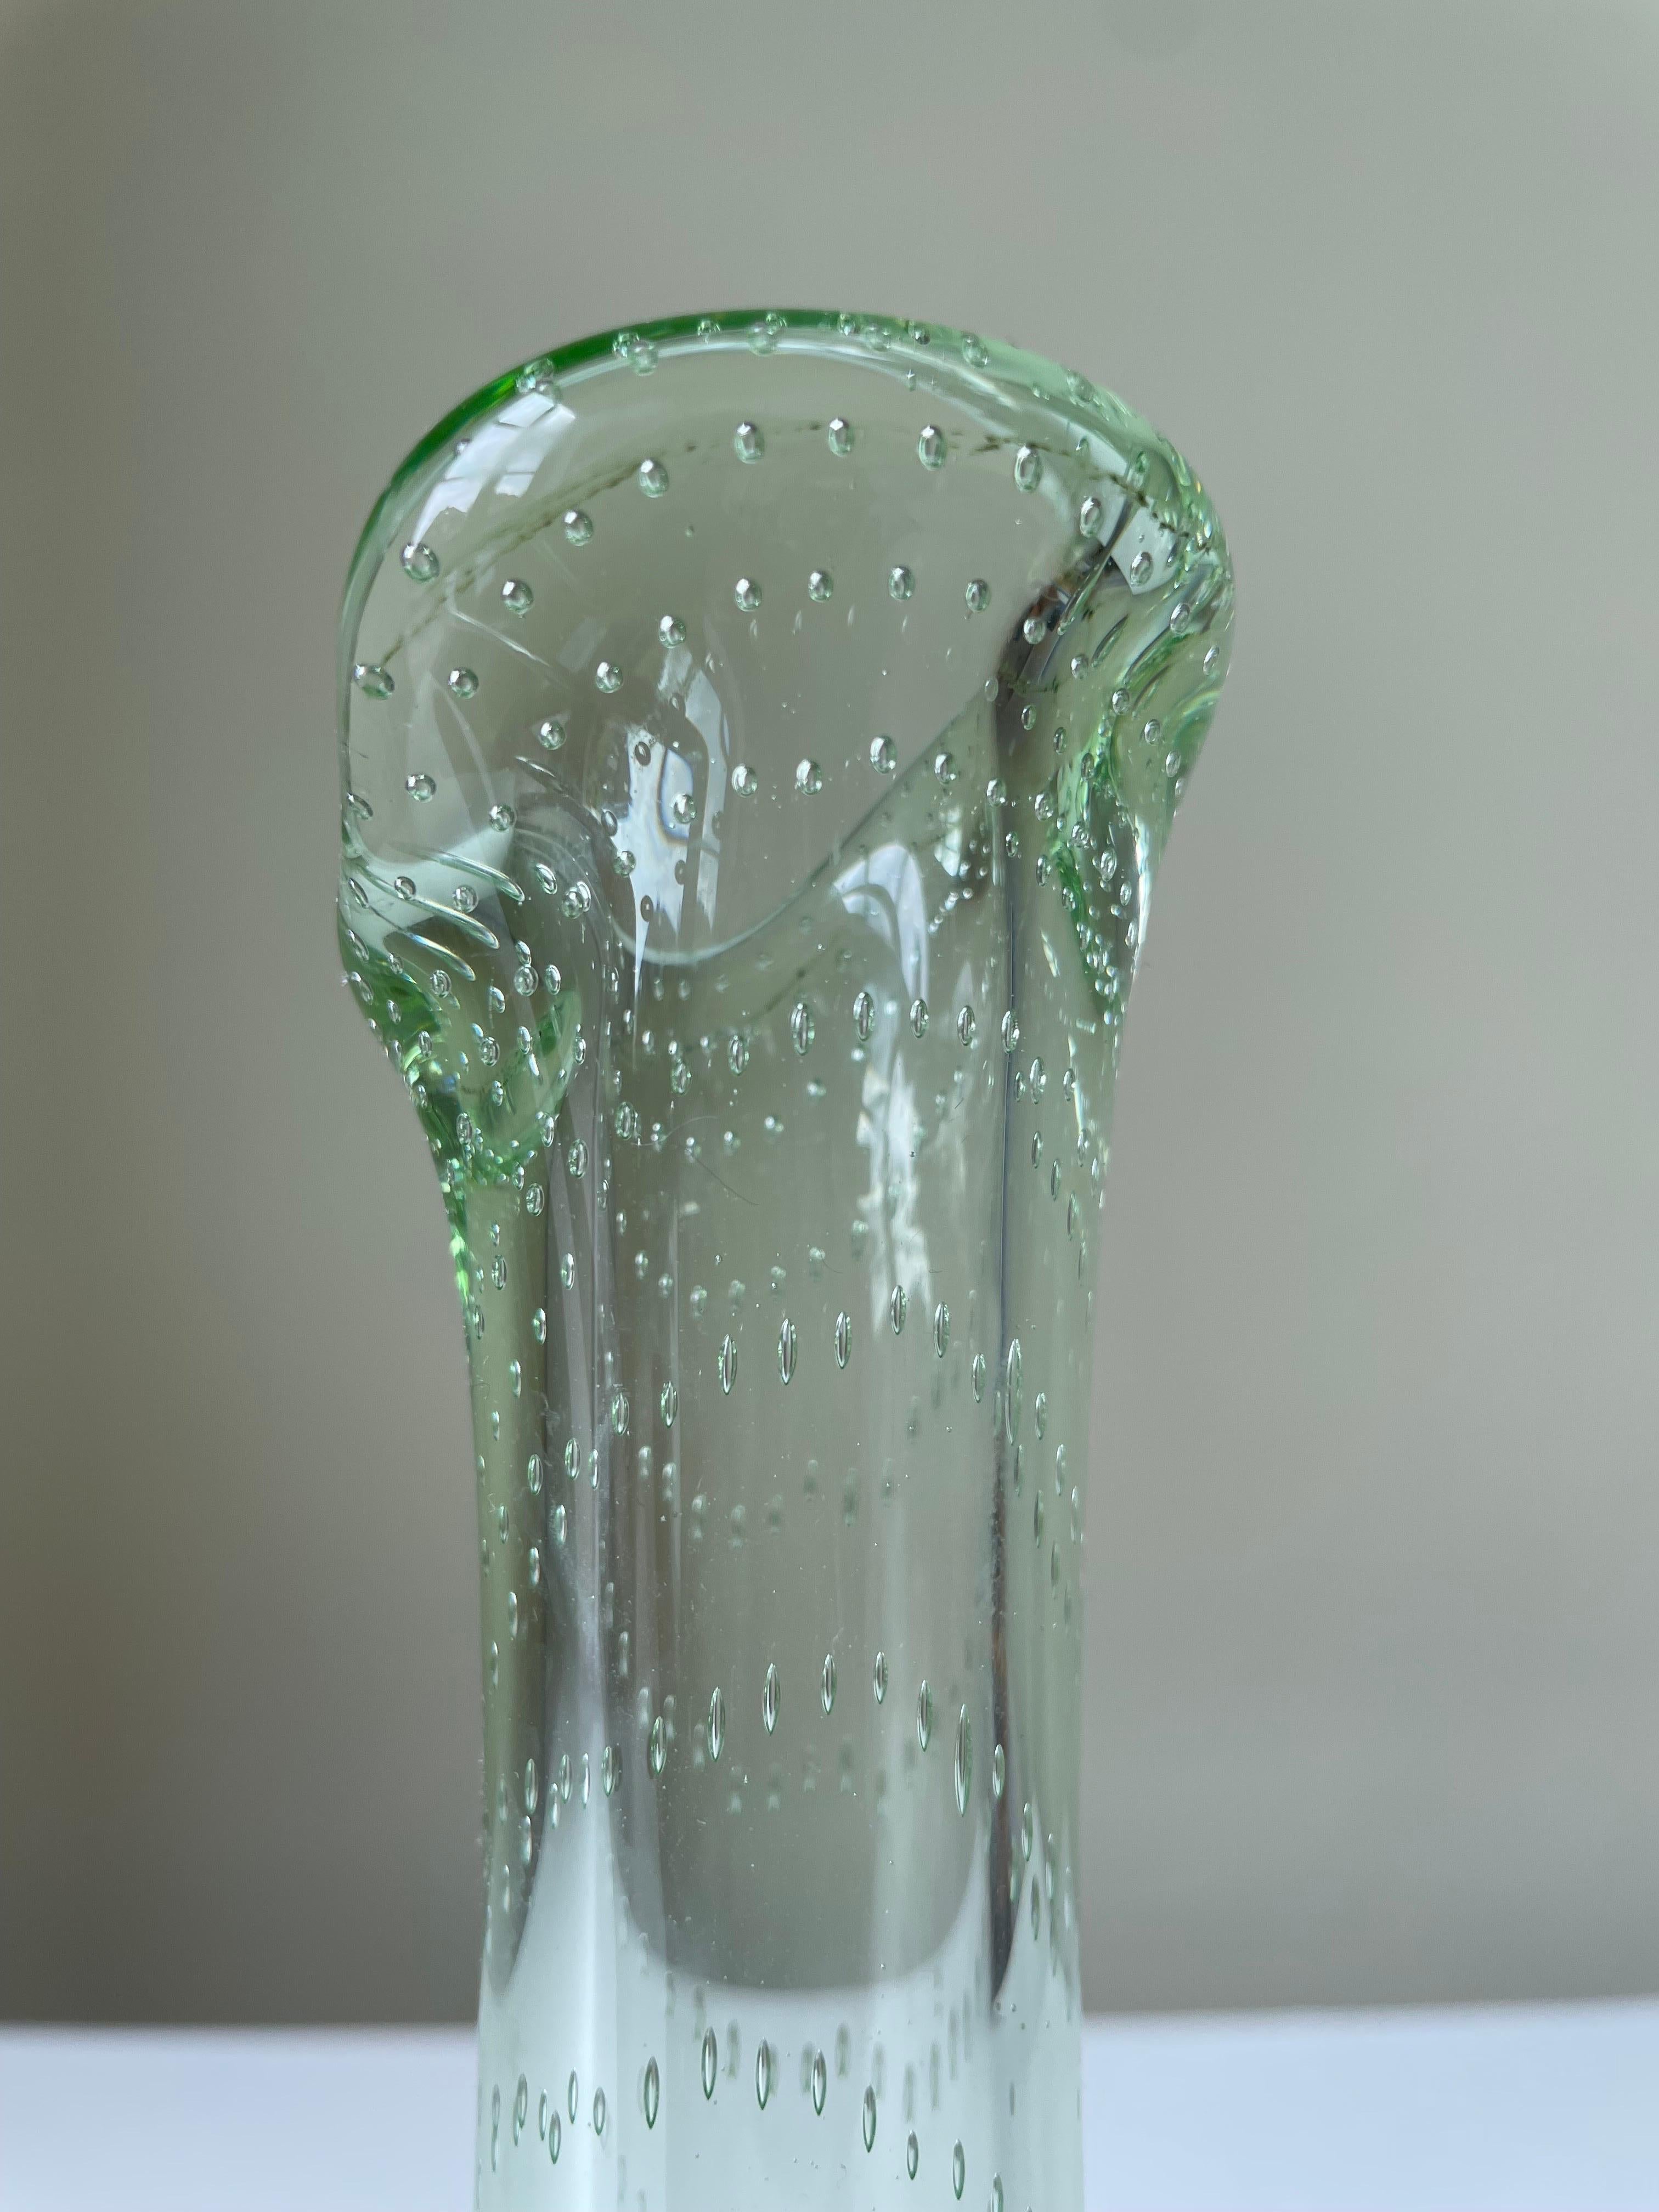 Große Vase aus grünem Blasenkunstglas, Skandinavien, 1960er Jahre (20. Jahrhundert) im Angebot